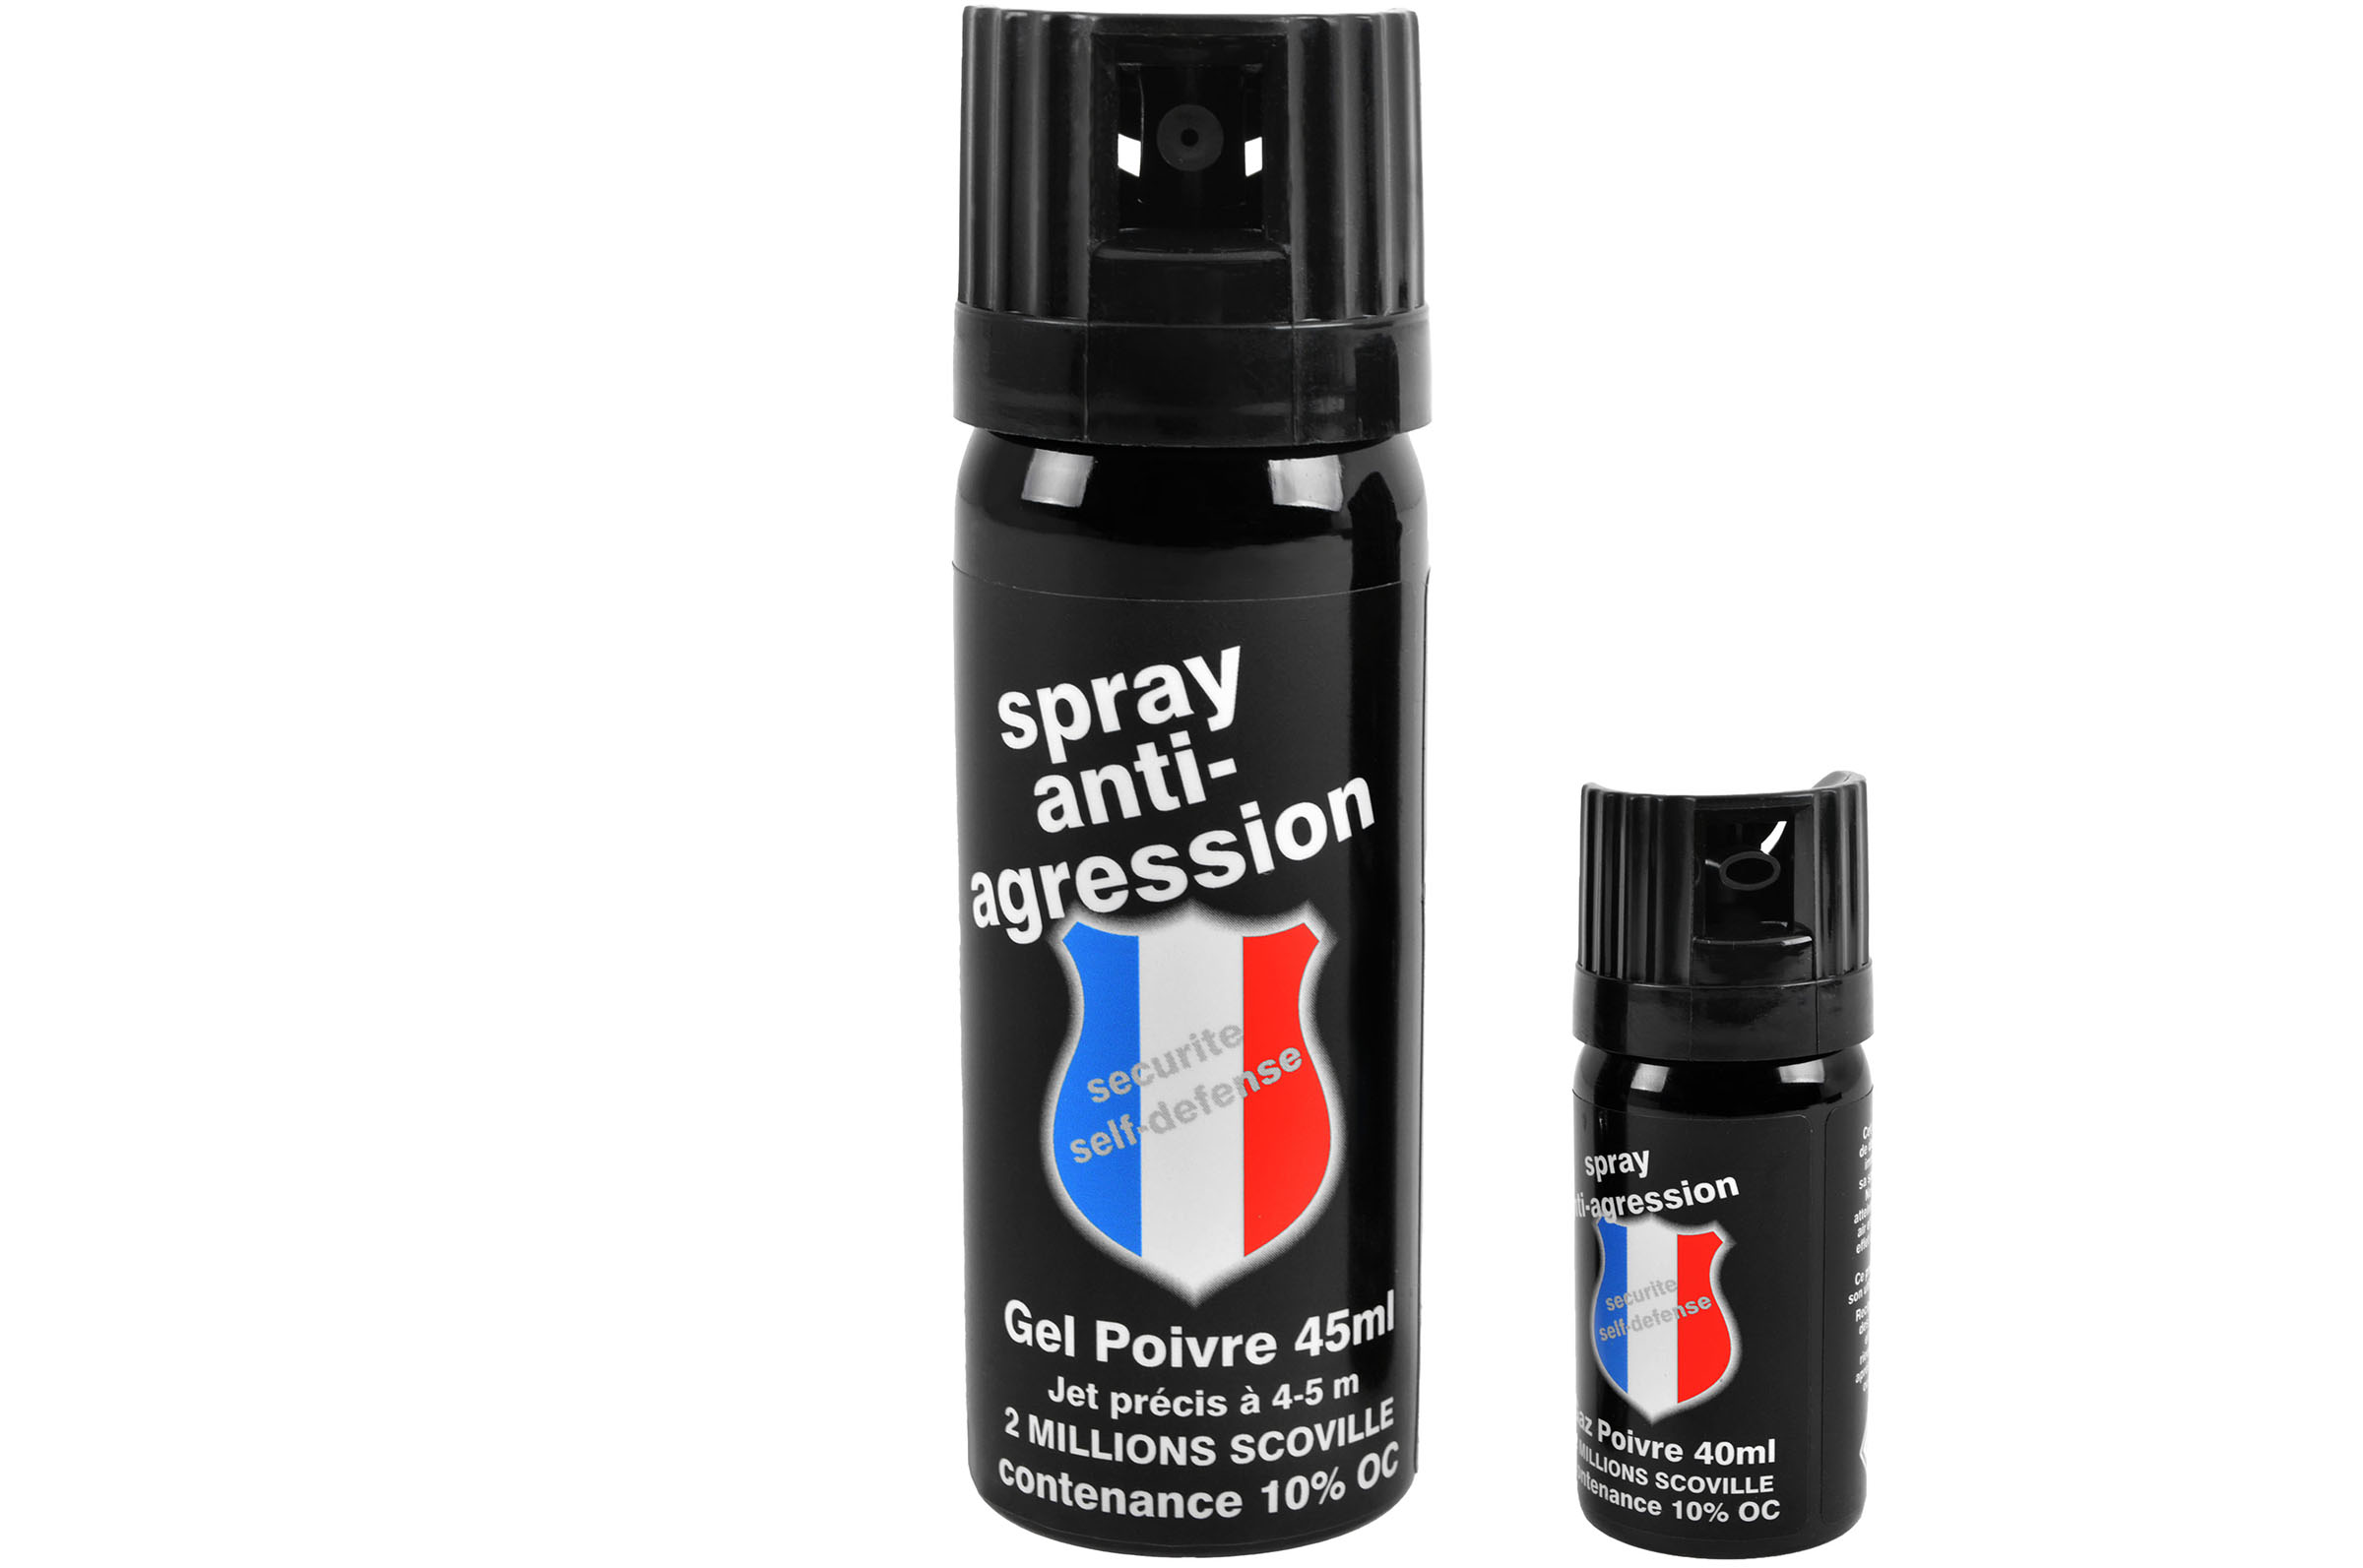 Kit de Survie : Spray Anti-Agression 20 ML et Alarme d'urgence 130